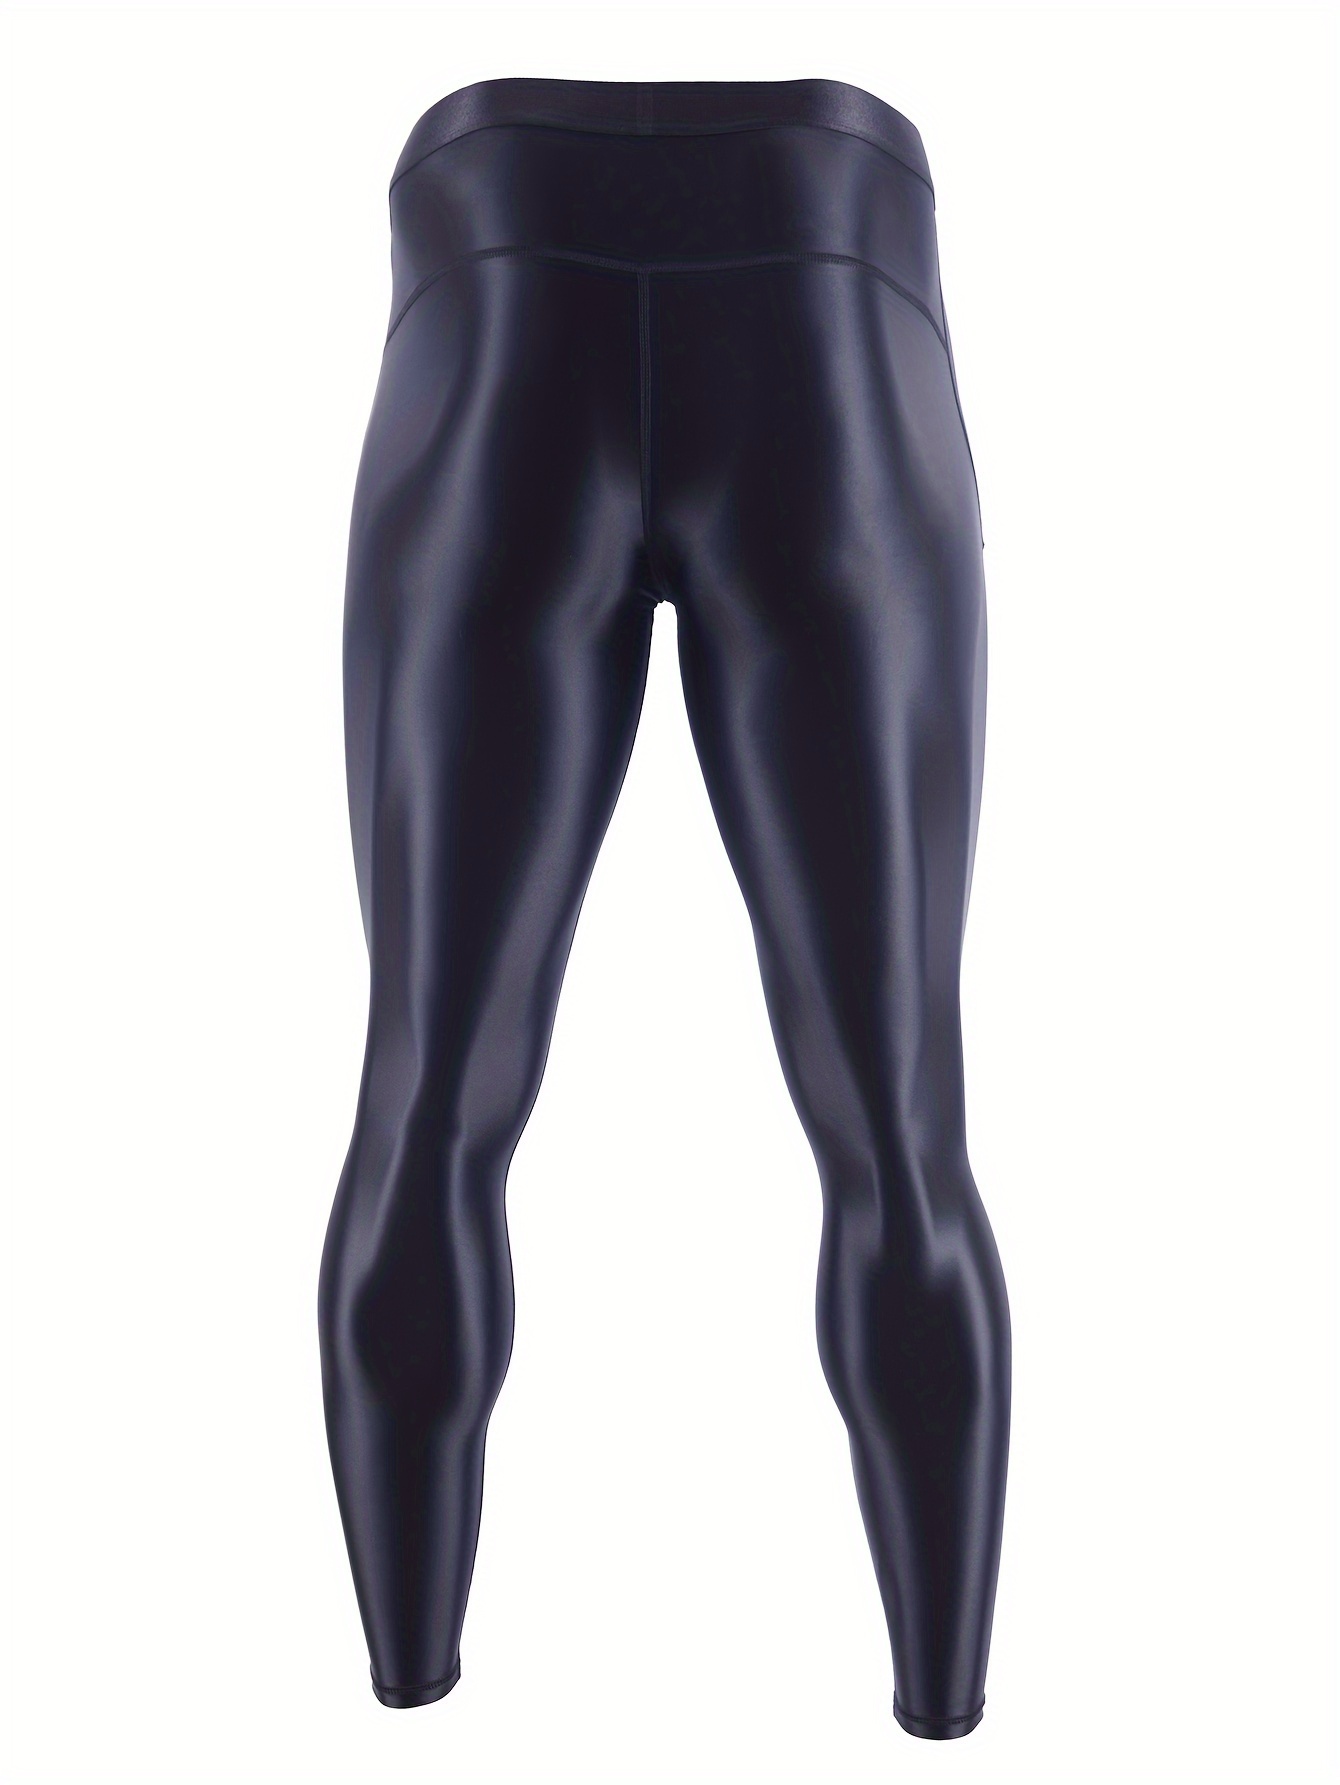 Super Black Shiny Leggings Wearing in Gym. Jump Rope Test 